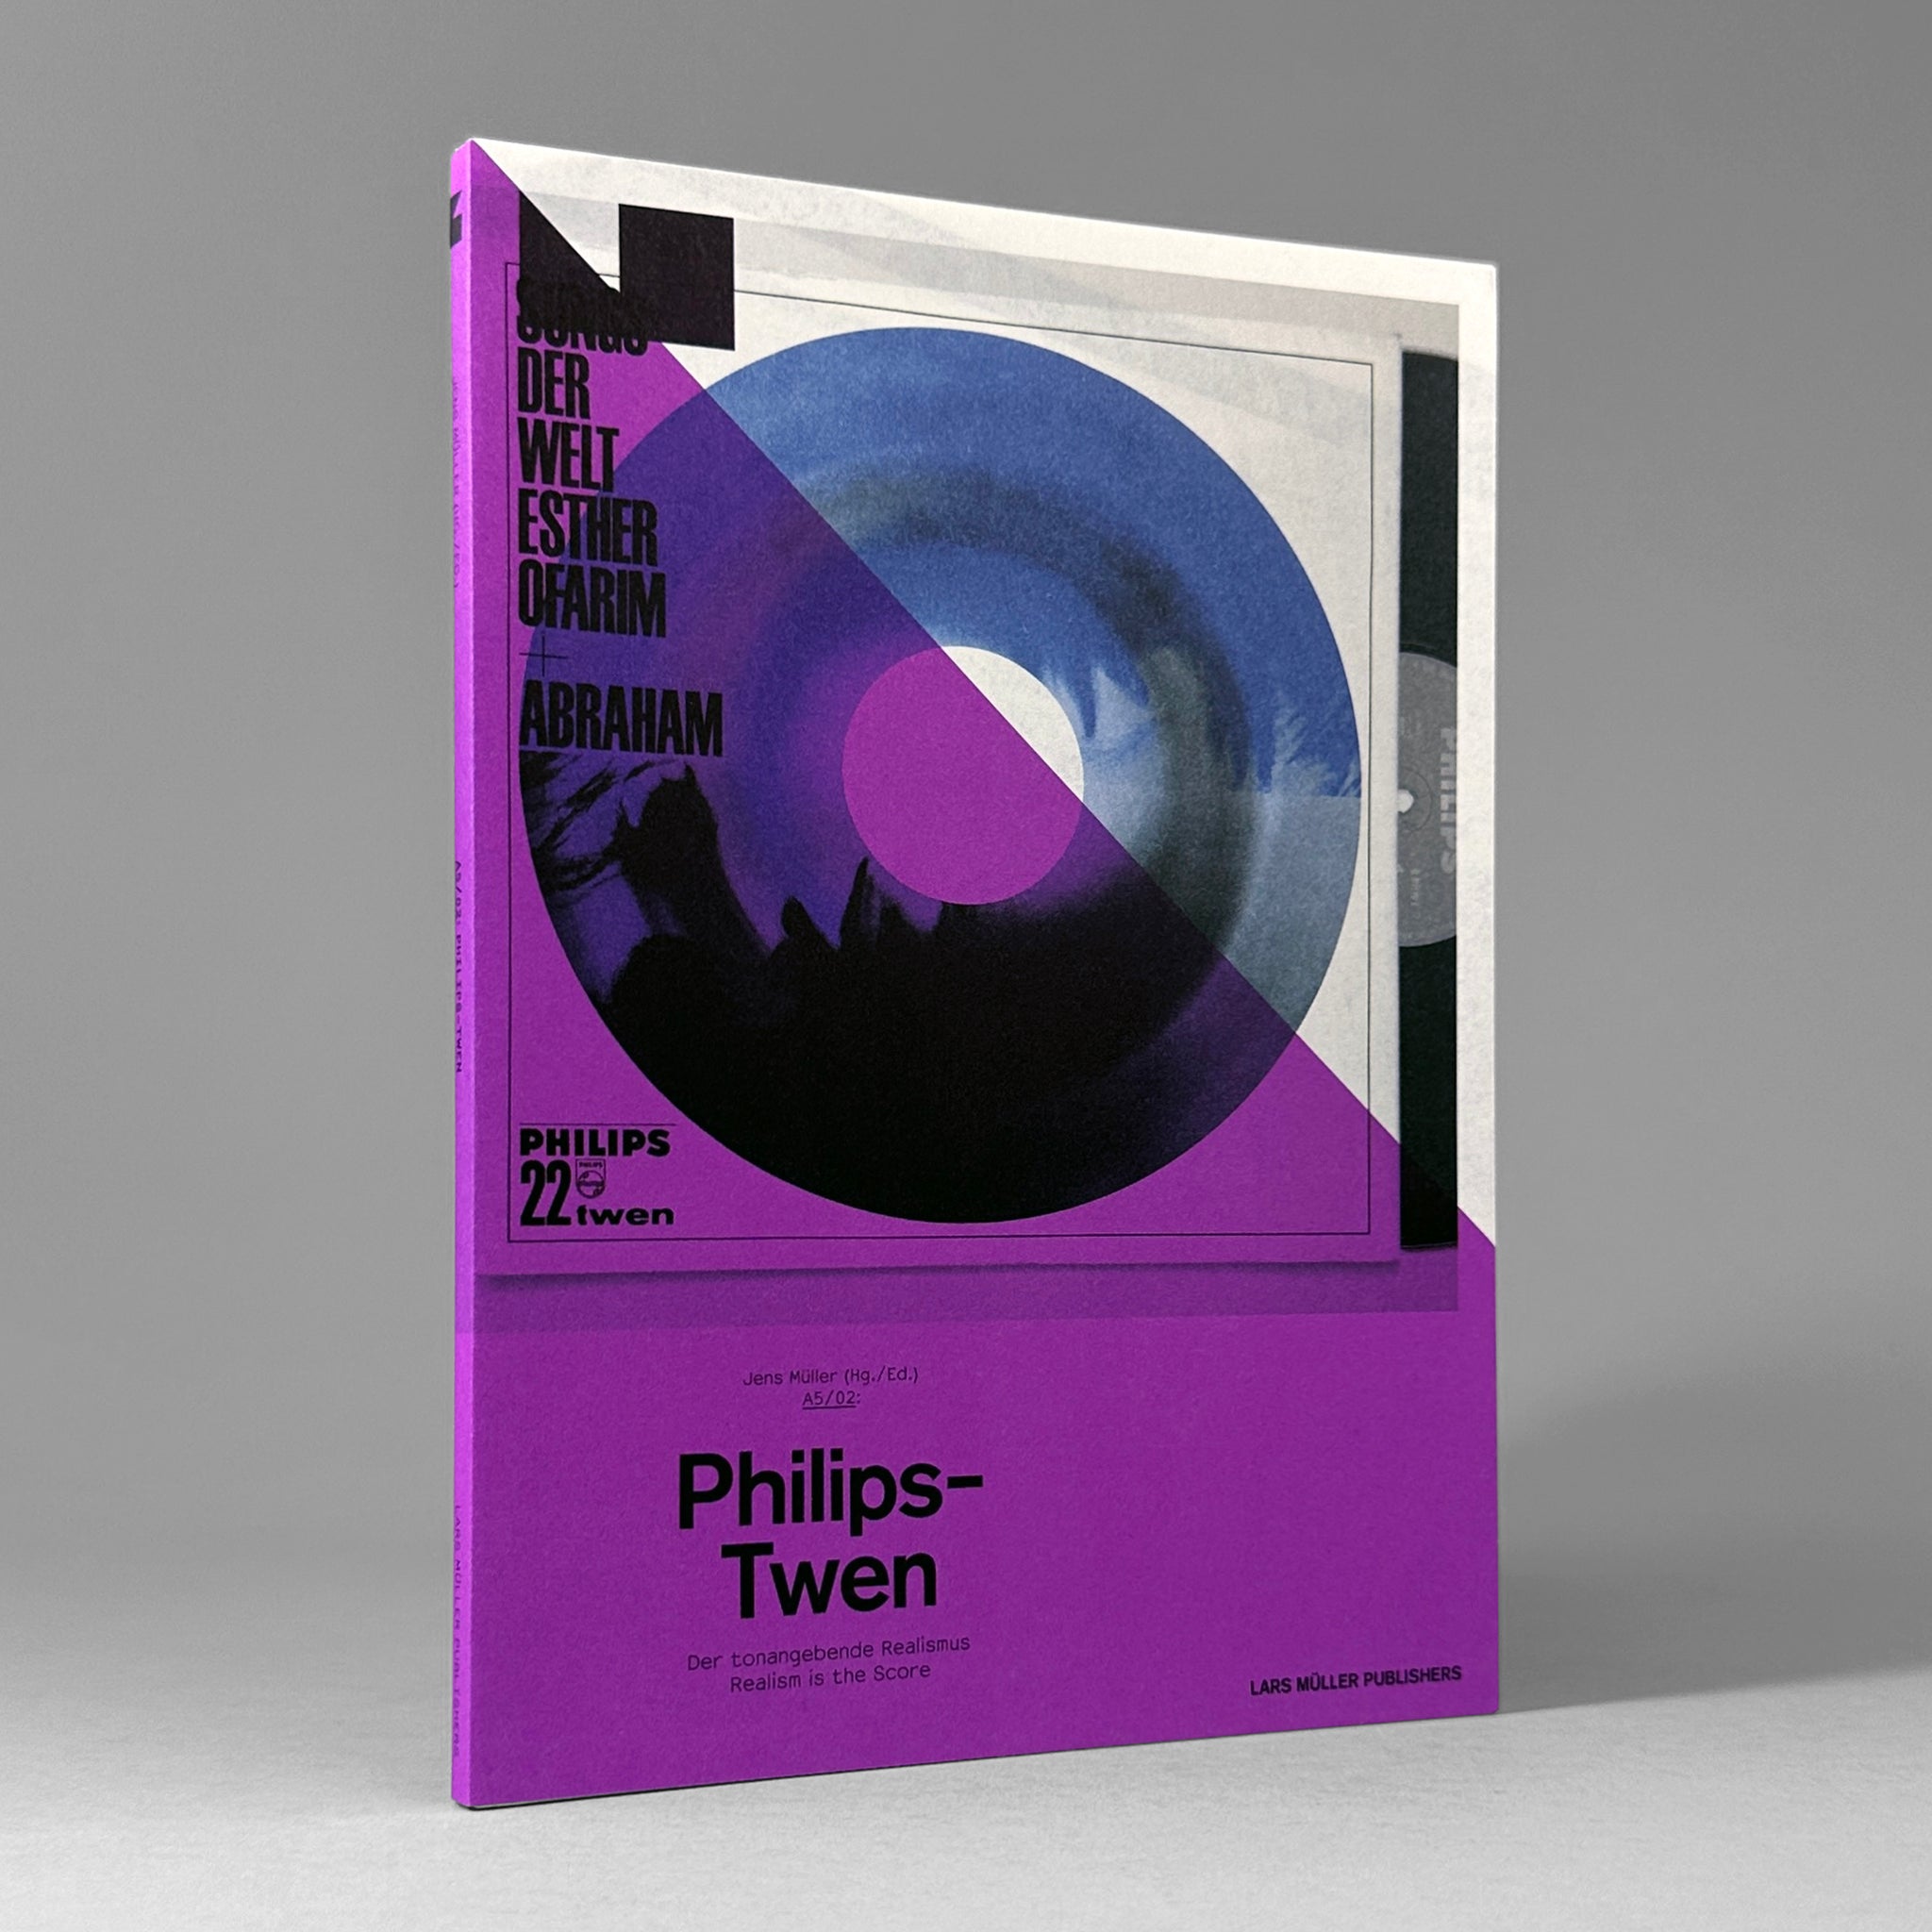 A5/02 Philips – Twen: Realism is the Score